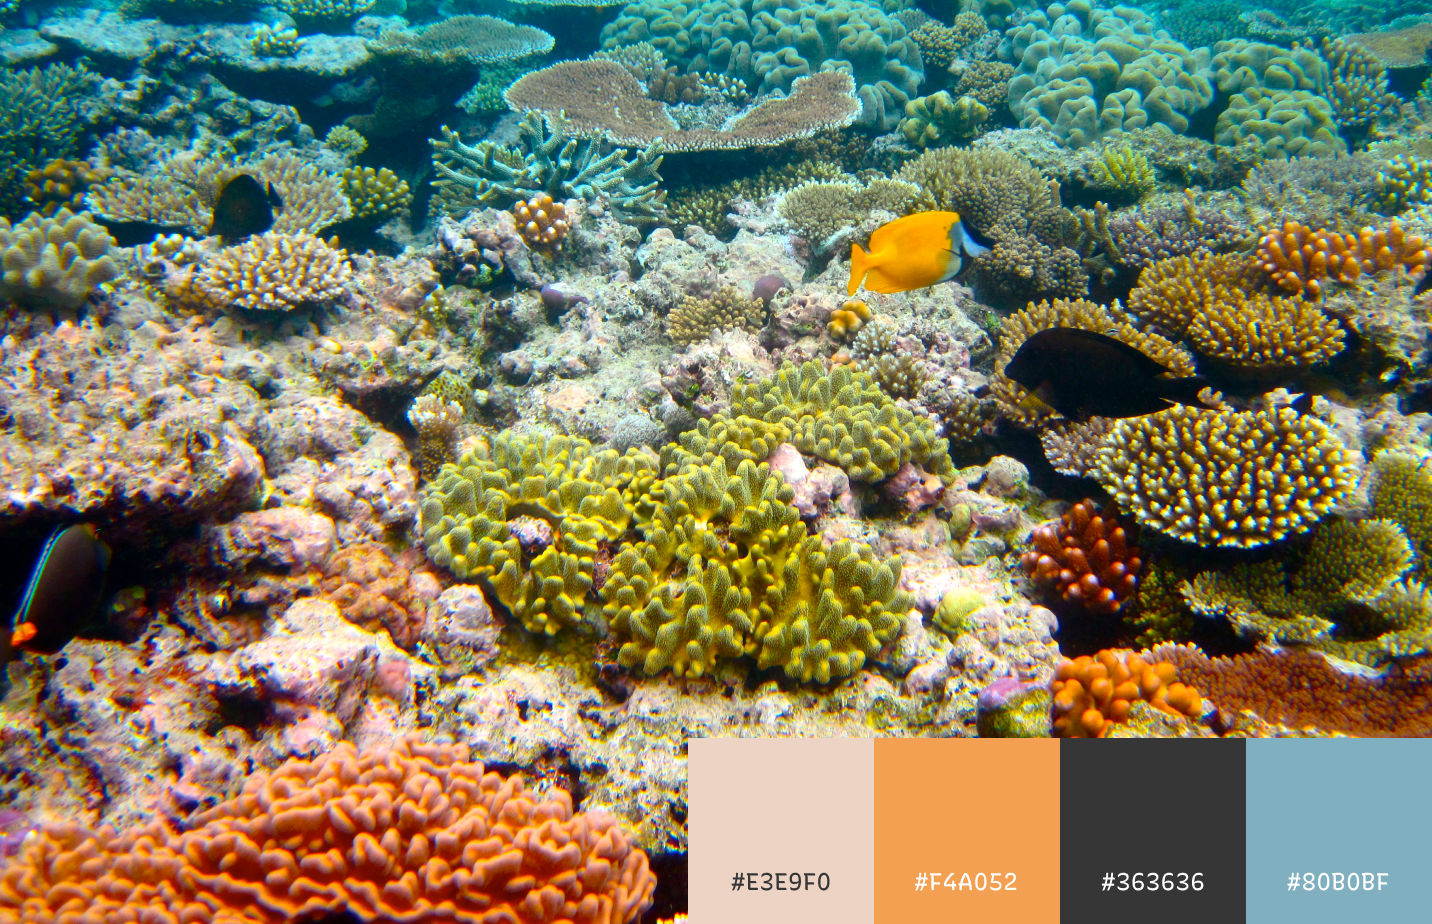 img: Greater Barrier Reef in Australia; source: flickr